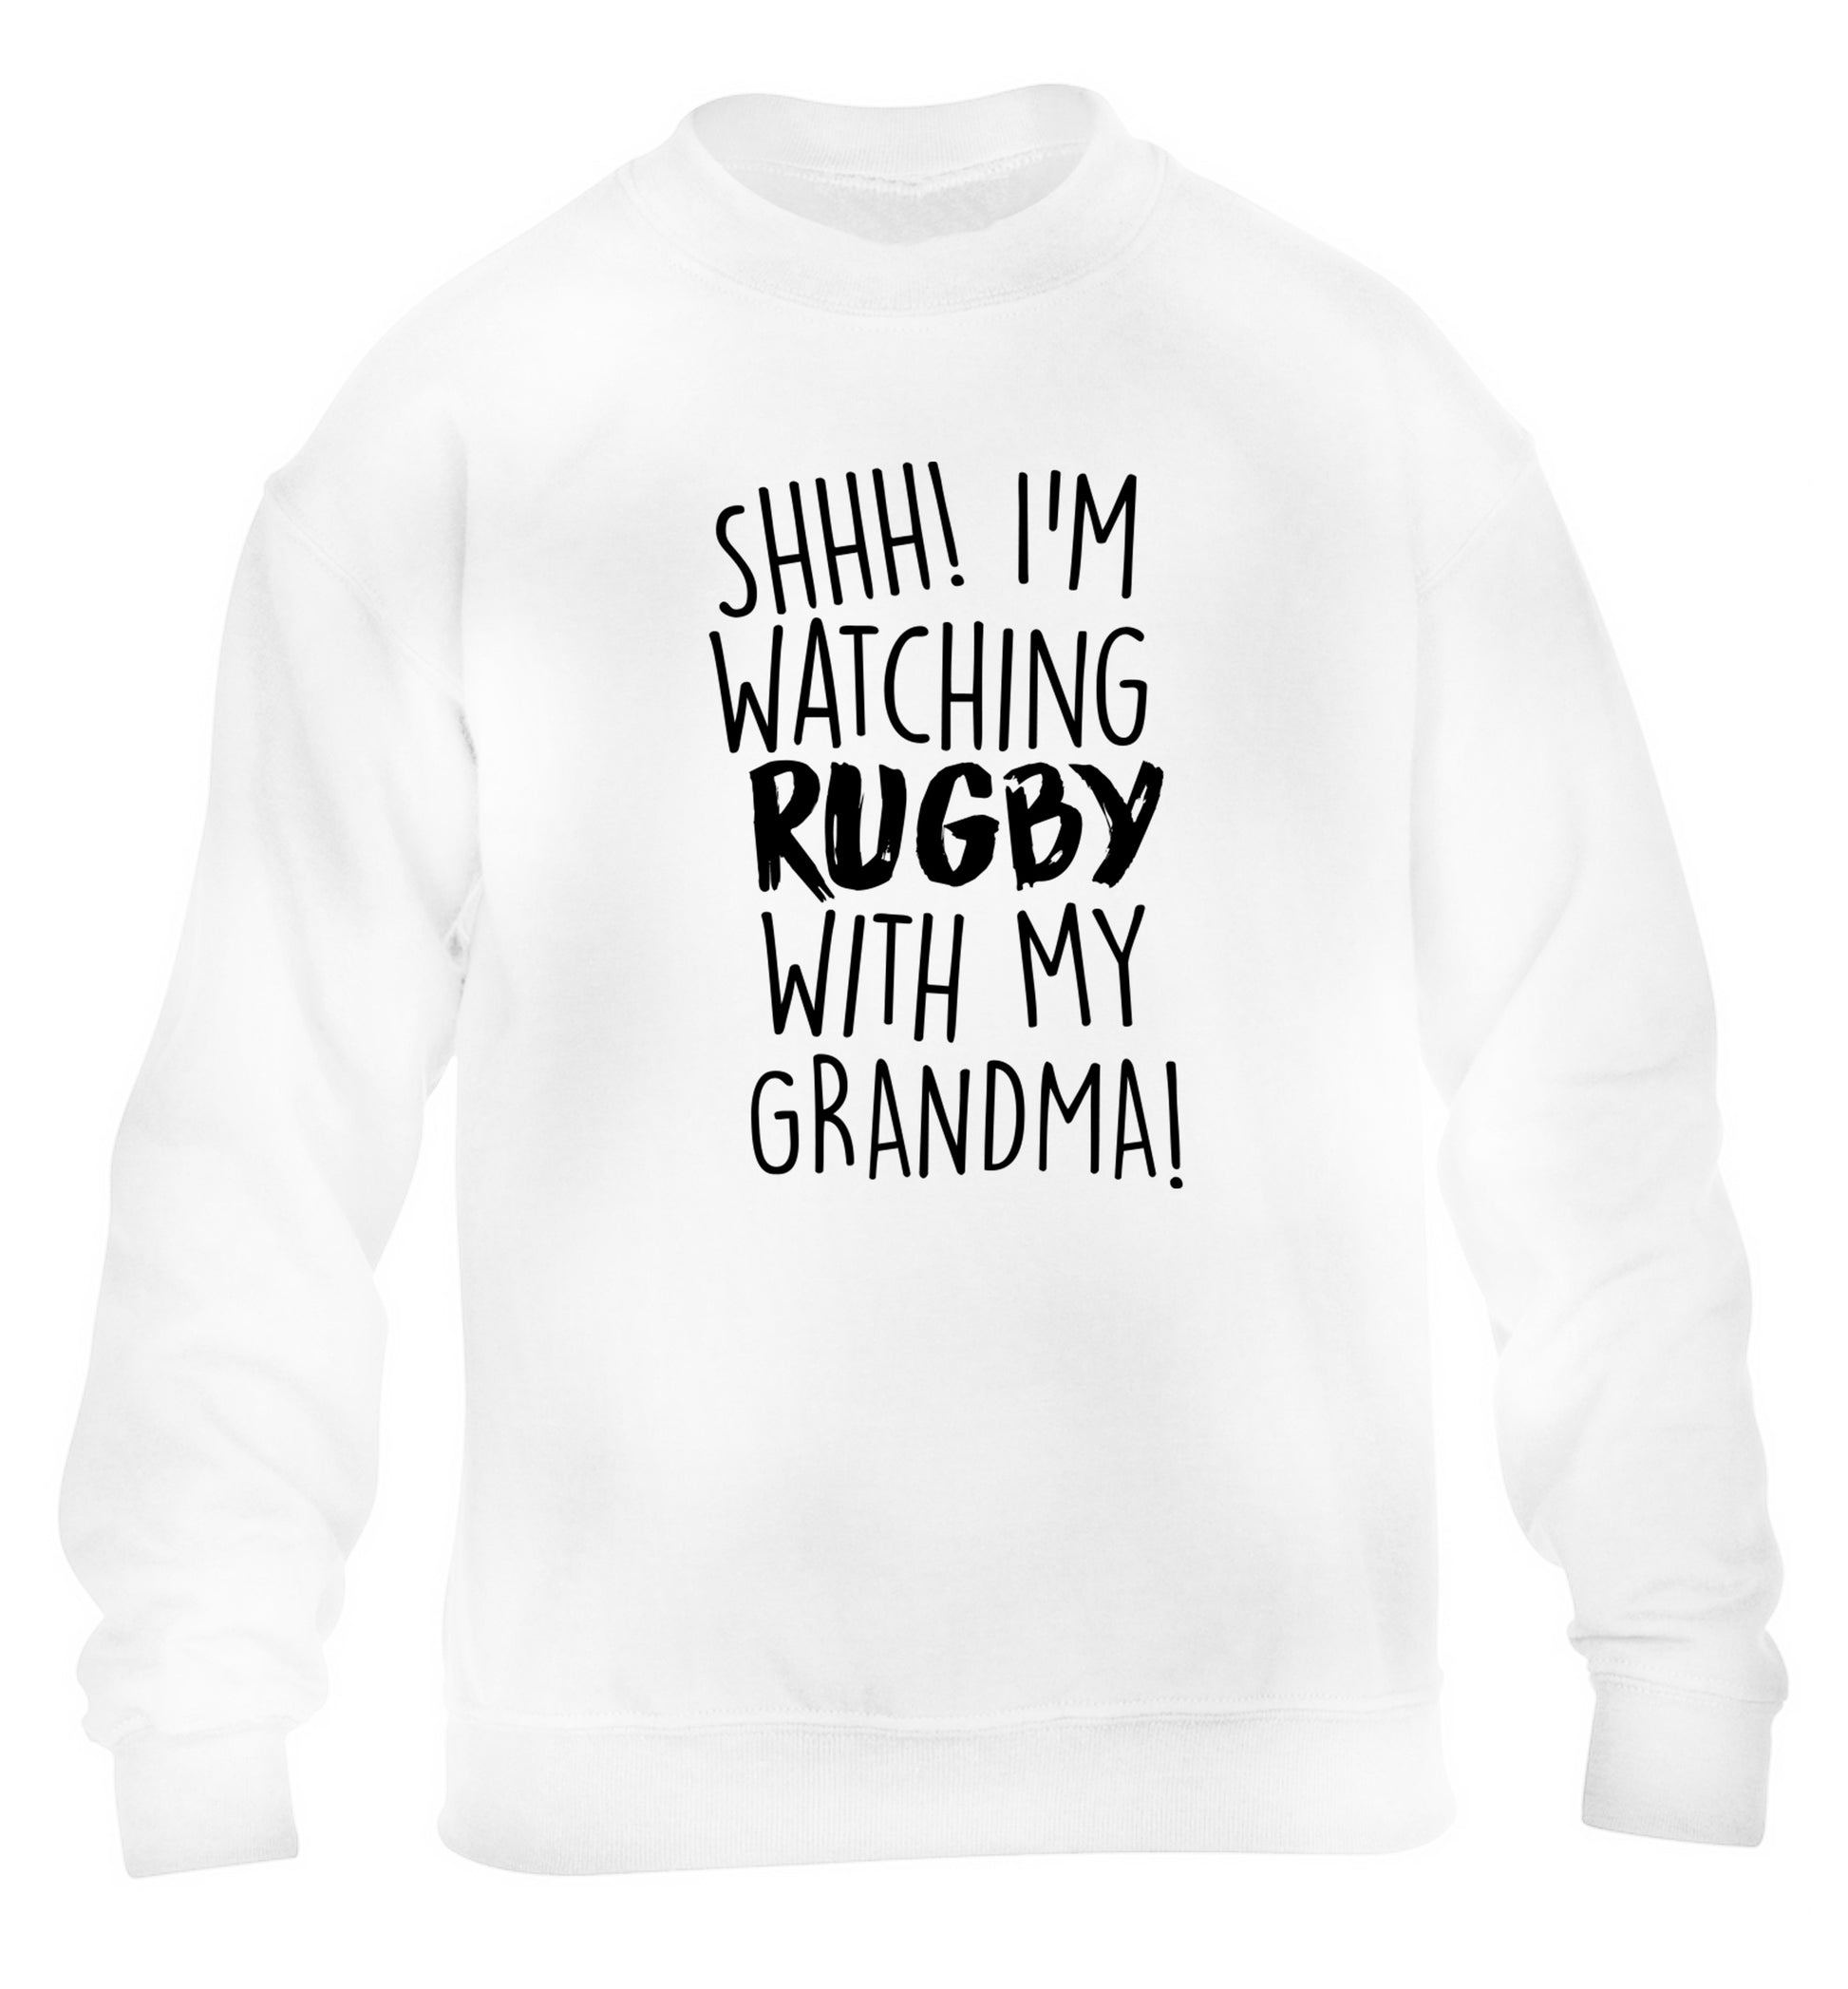 Shh I'm watching rugby with my grandma children's white sweater 12-13 Years